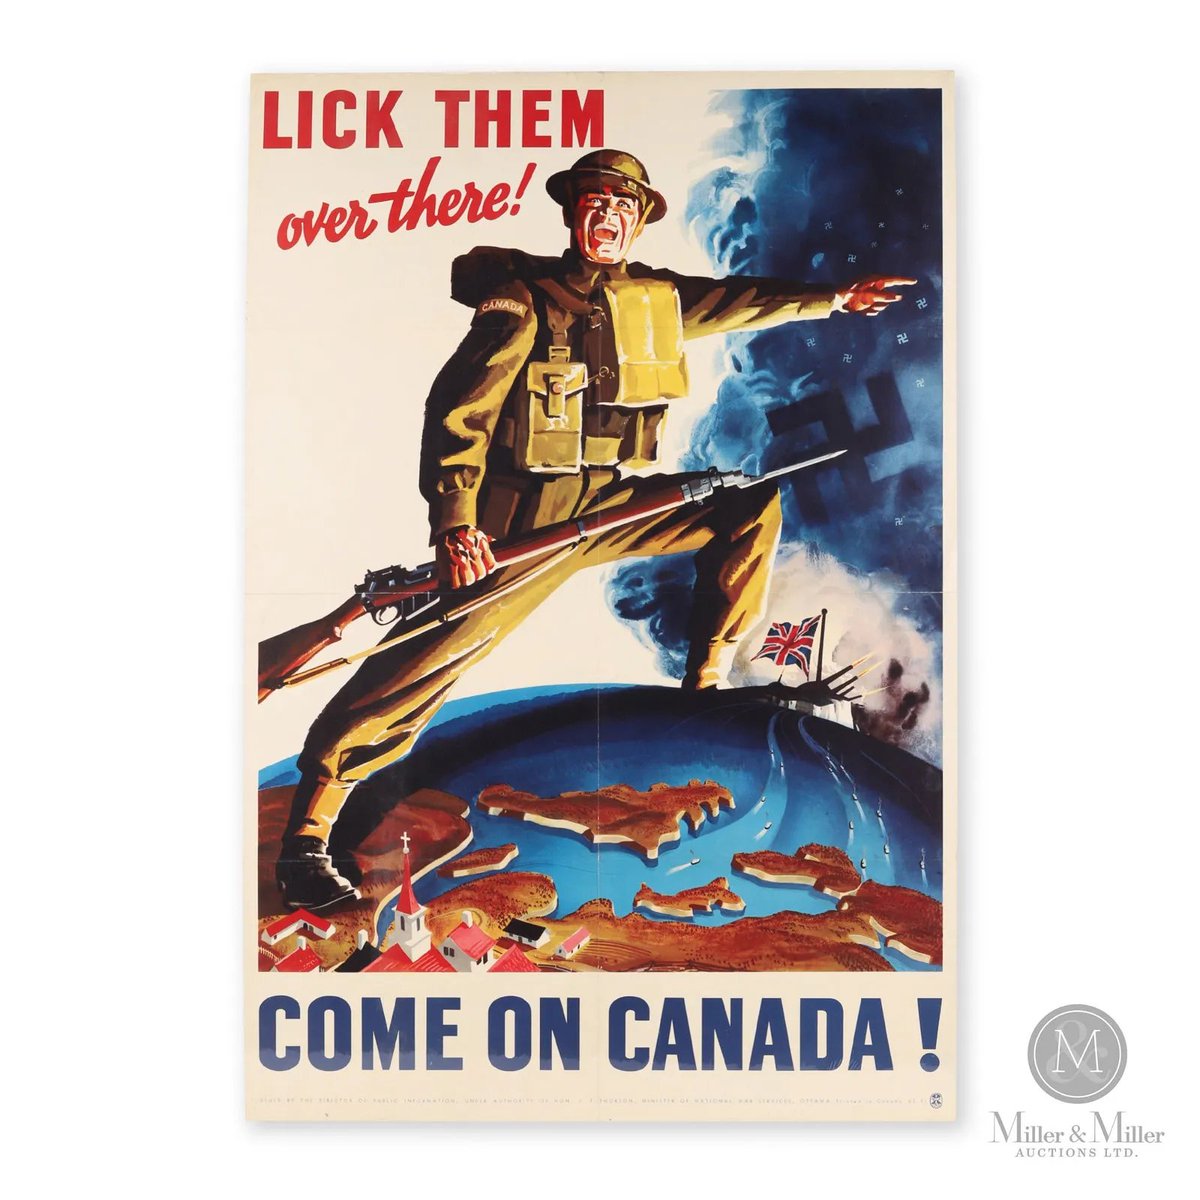 We were this once. 
#LestWeForget #VeteransLivesMatter #WWII  #Canadahasfallen